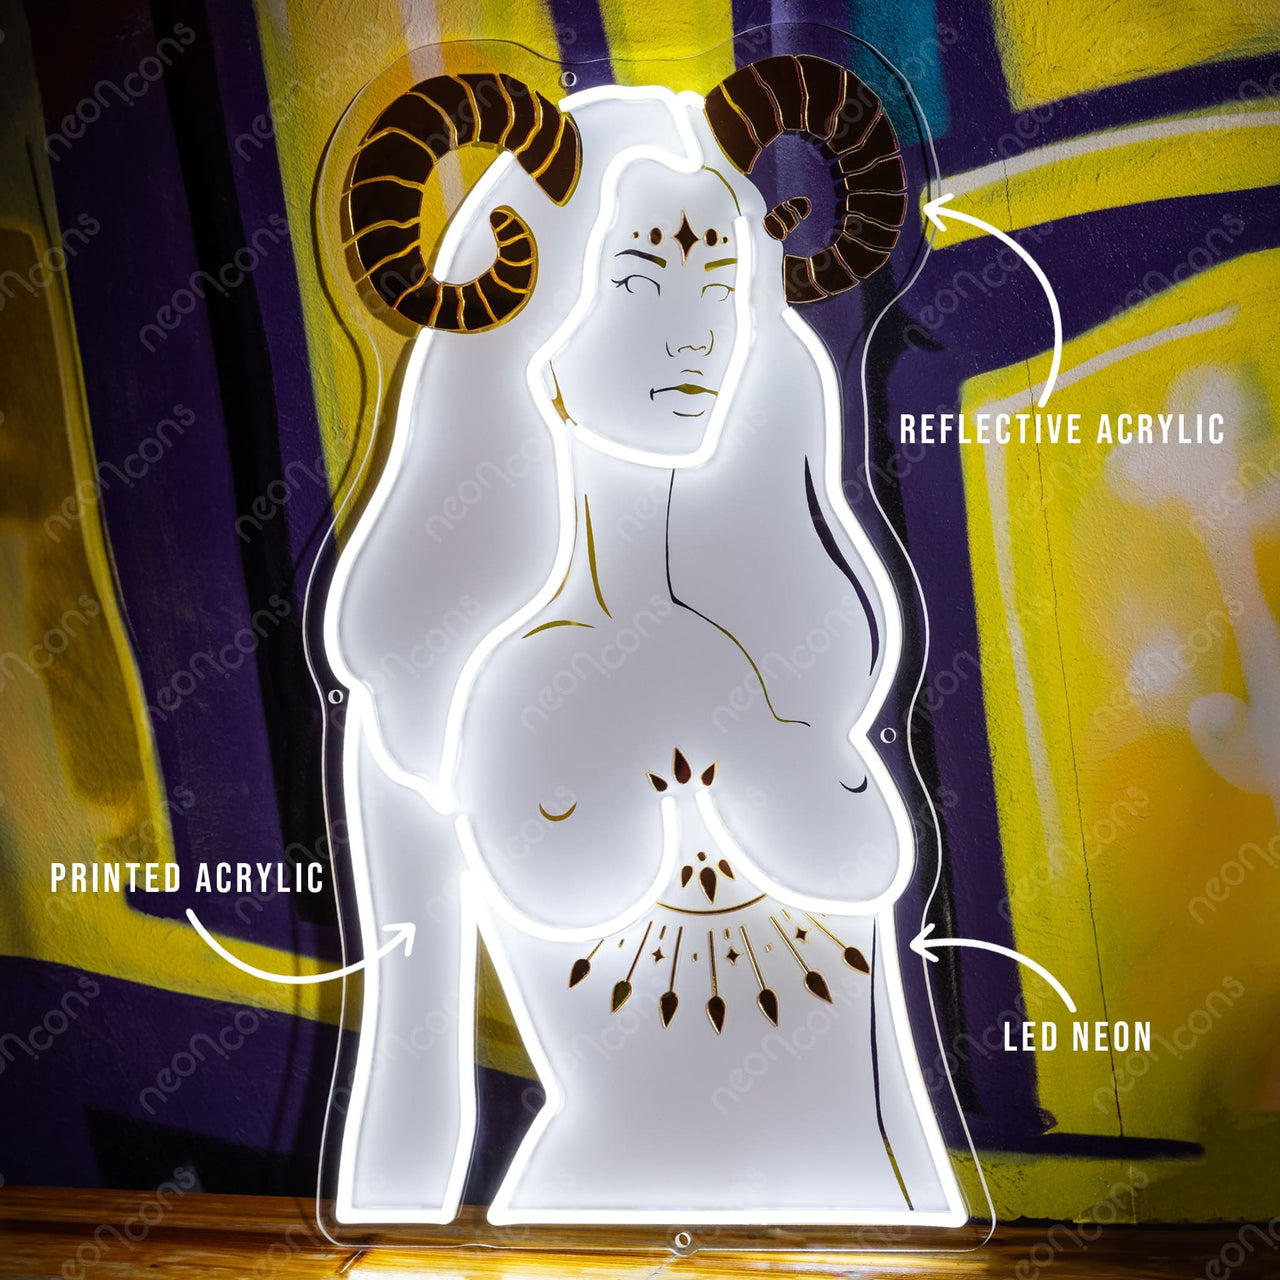 "Aquarius Goddess" LED Neon x Print x Reflective Acrylic by Neon Icons